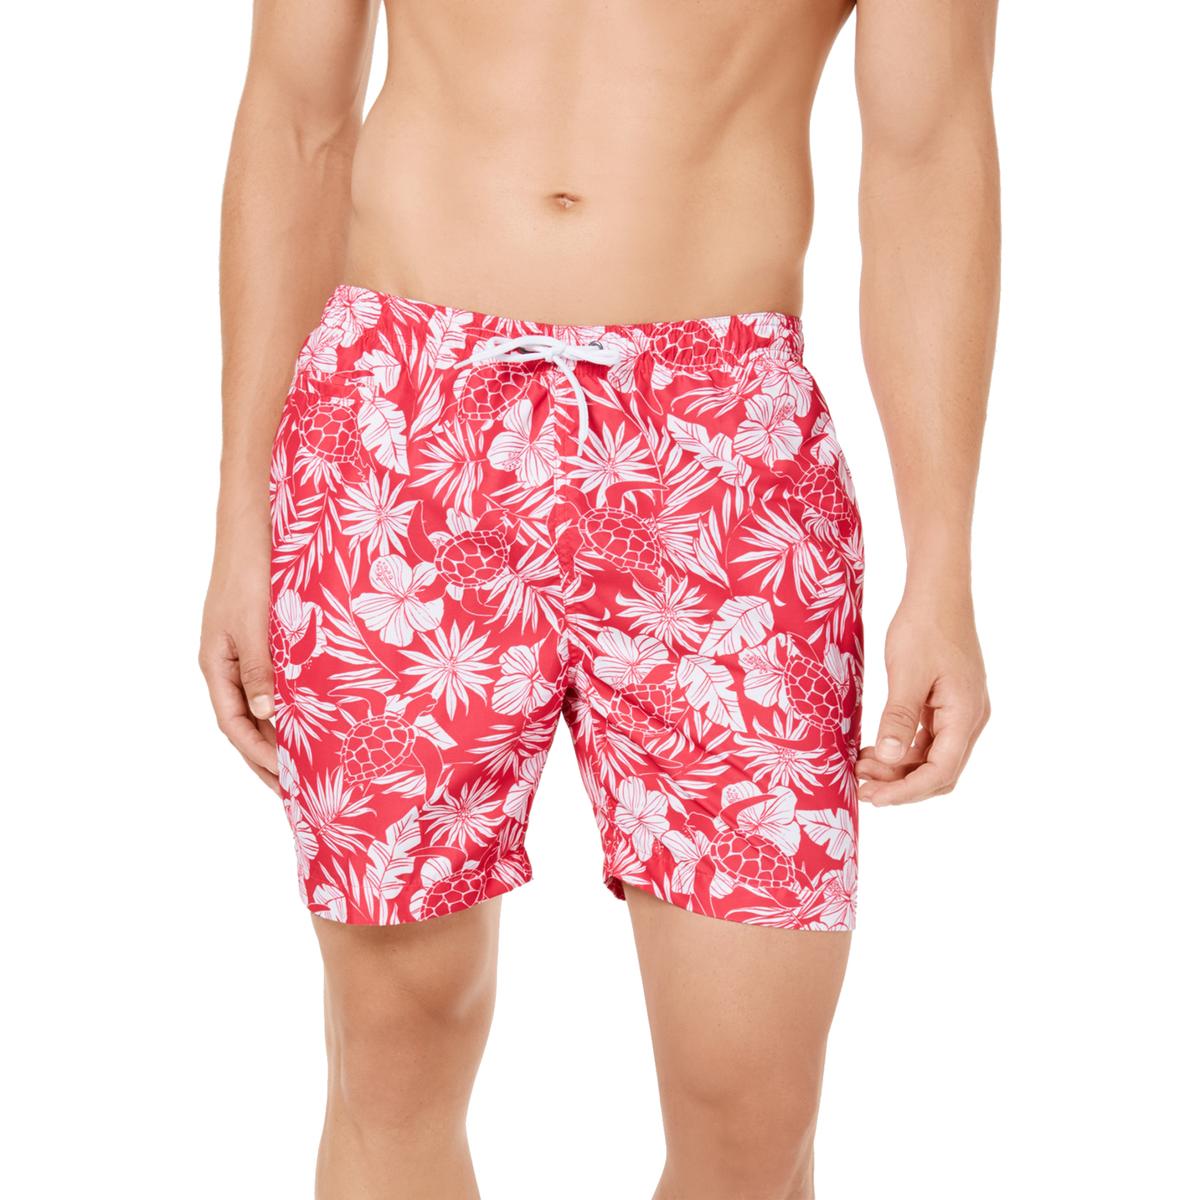 Trunks Mens Pink Floral Board Shorts Beachwear Swim Trunks XXL BHFO ...